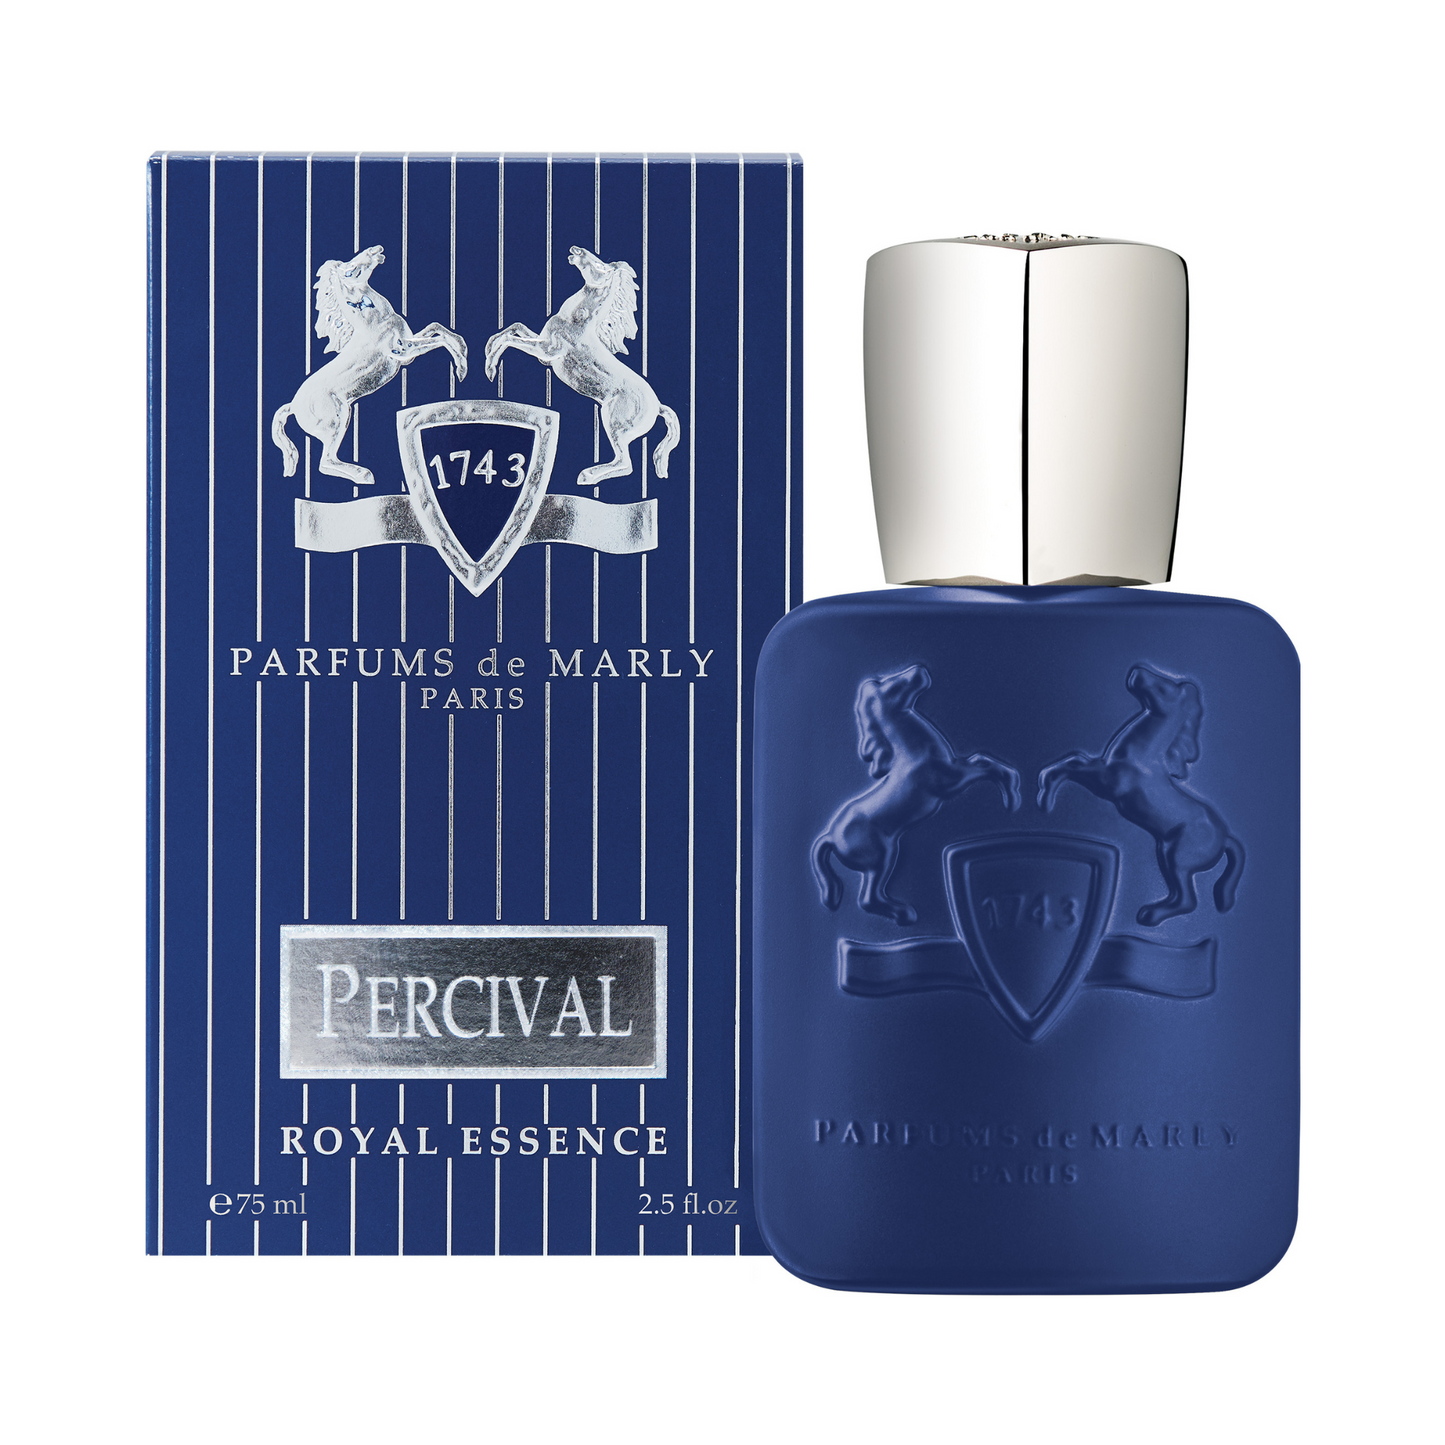 Parfums de marly - Percival